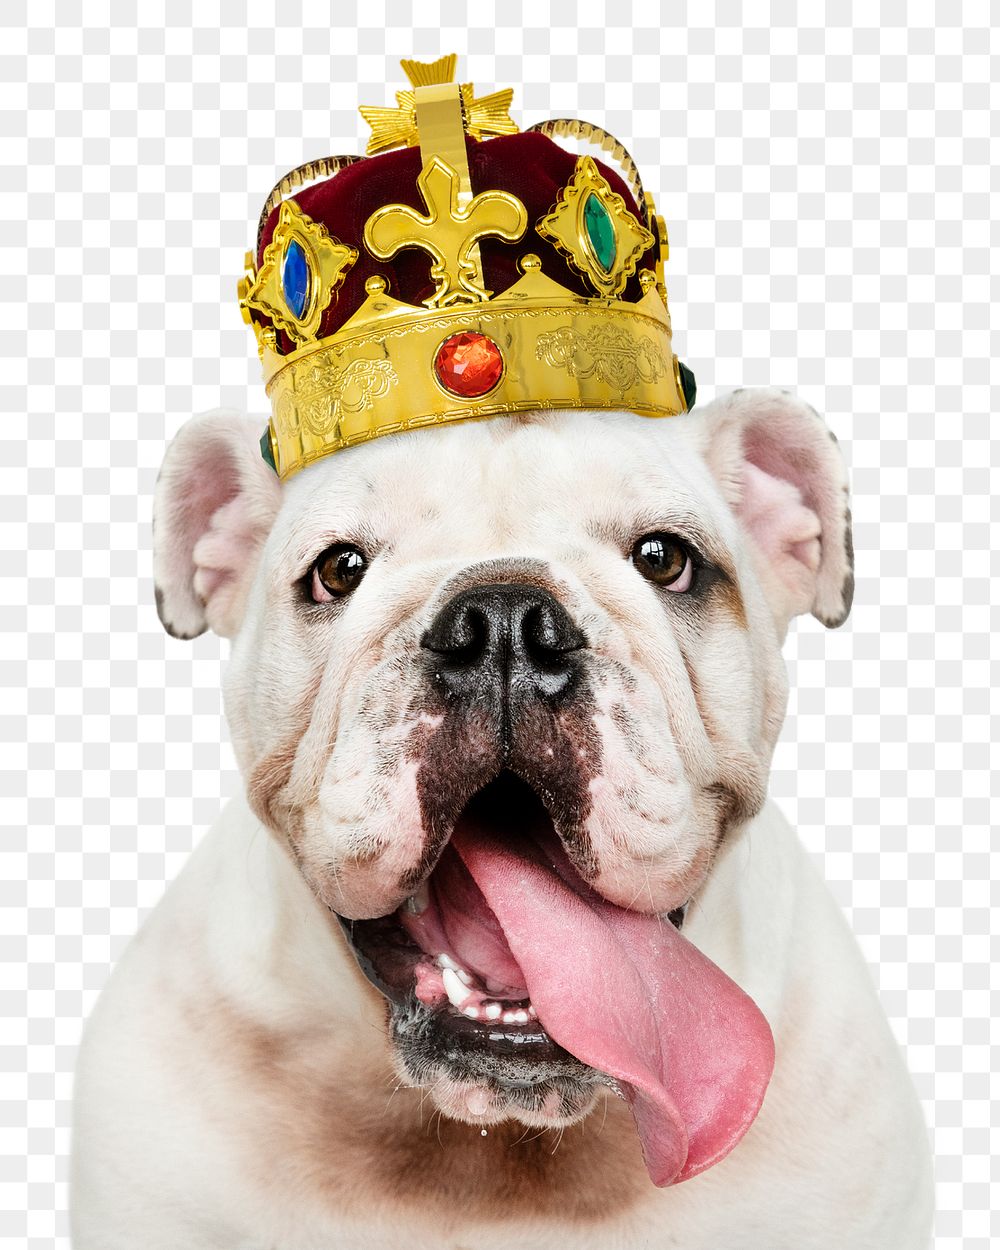 Royal dog png sticker, White English Bulldog pet on transparent background